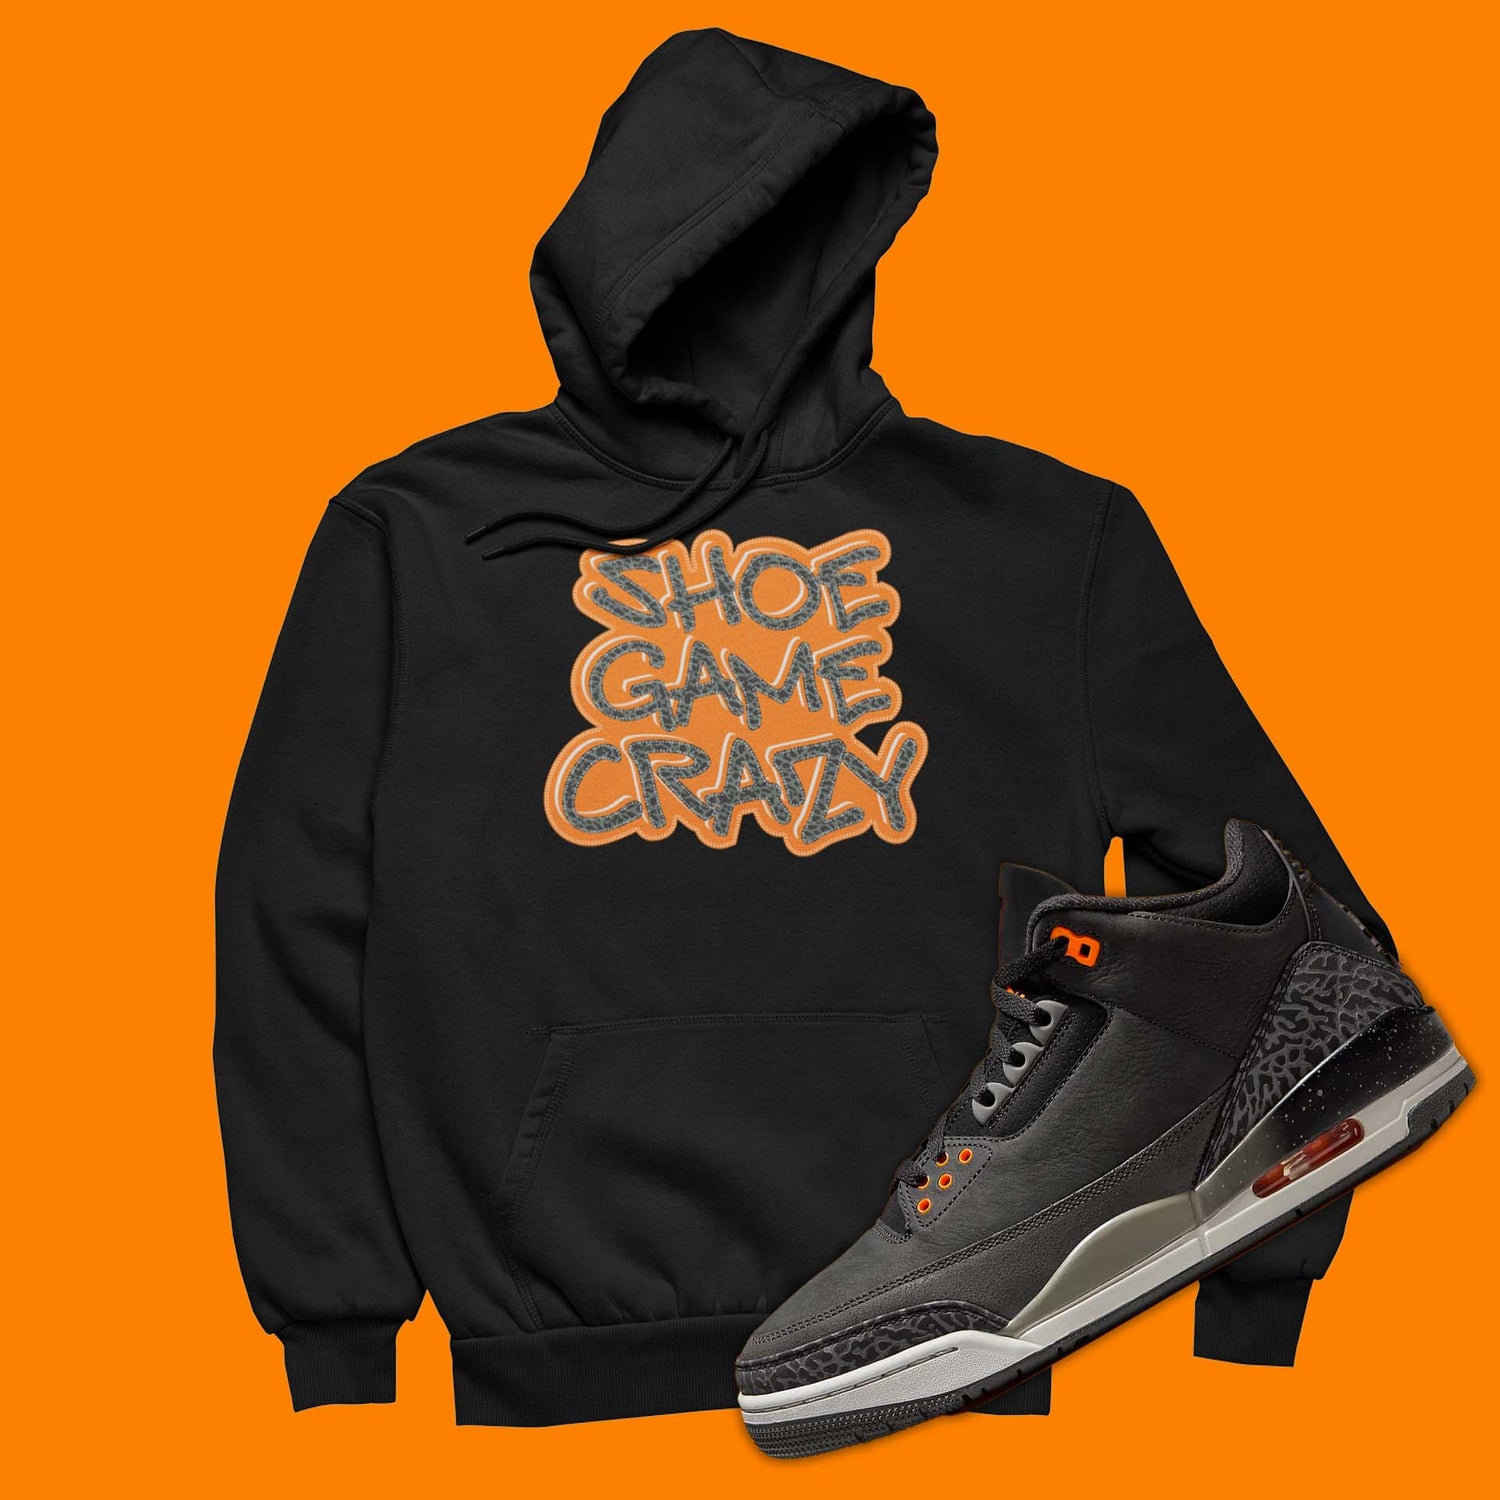 Shoe Game Crazy Hoodie Matching Air Jordan 3 Fear Pack